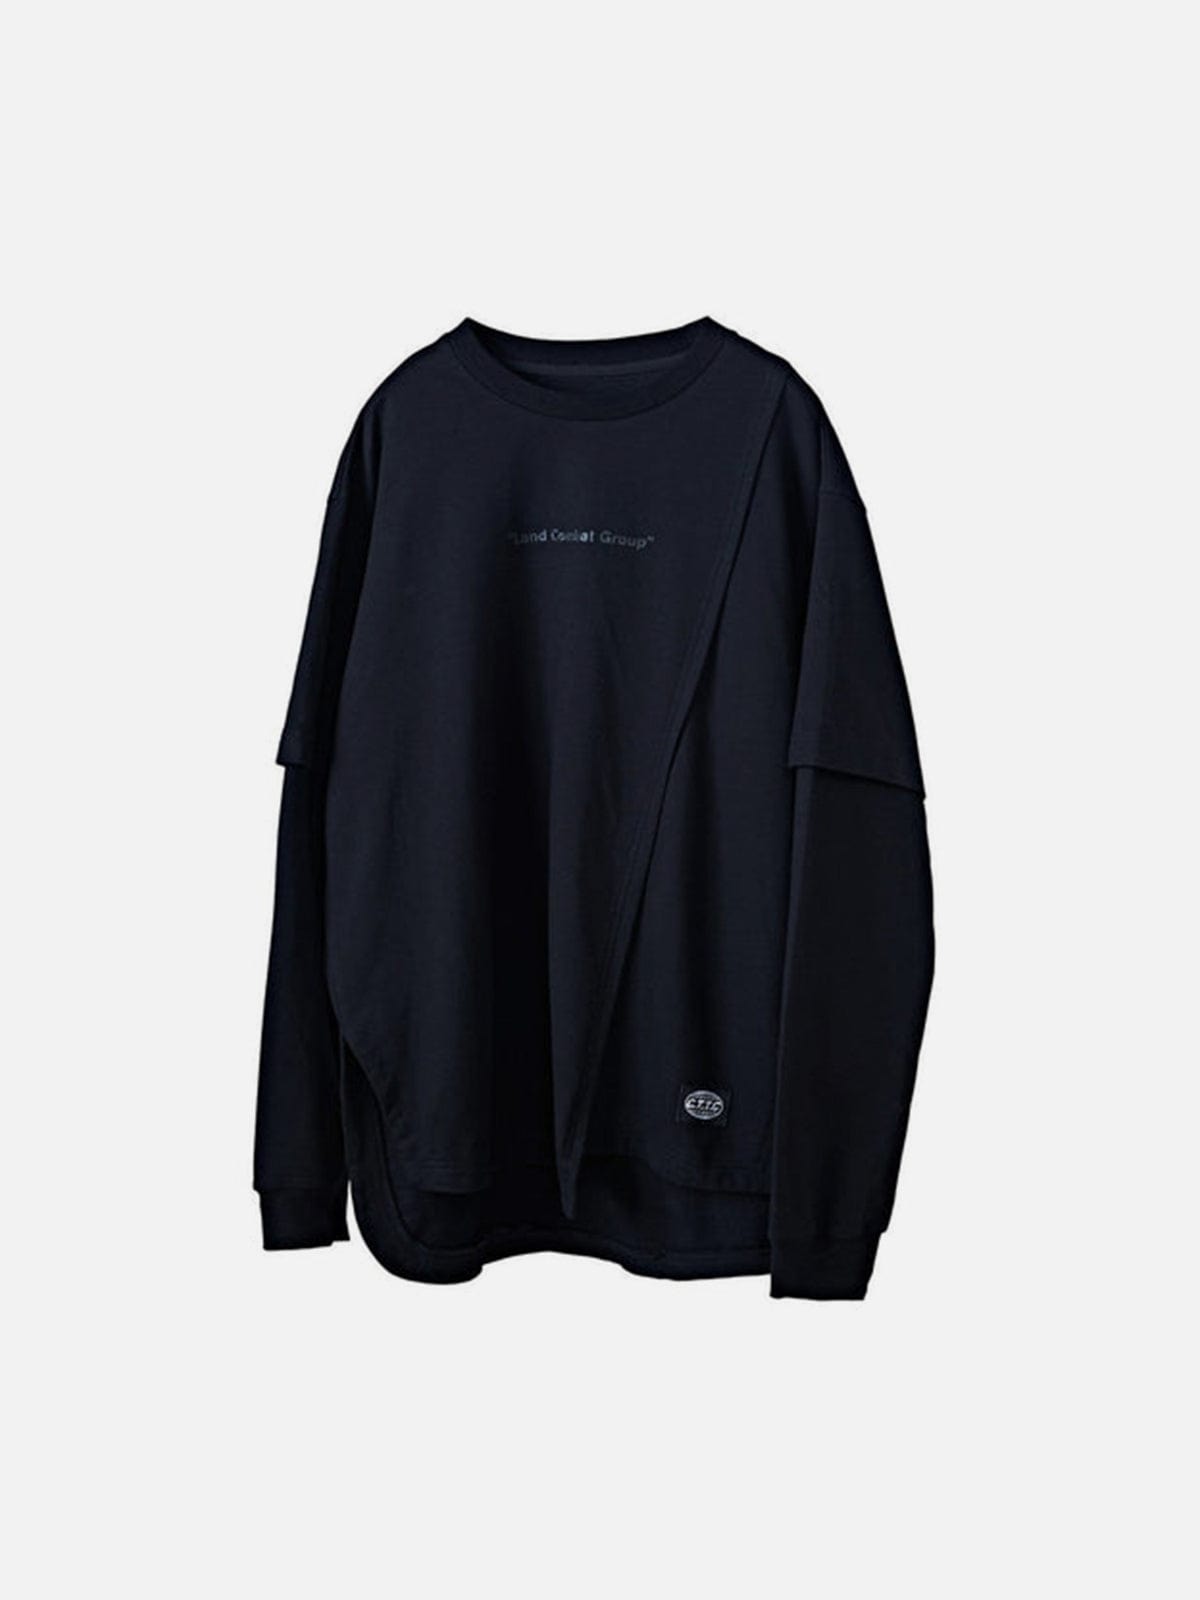 Patchwork Fake Two Sweatshirt Streetwear Brand Techwear Combat Tactical YUGEN THEORY